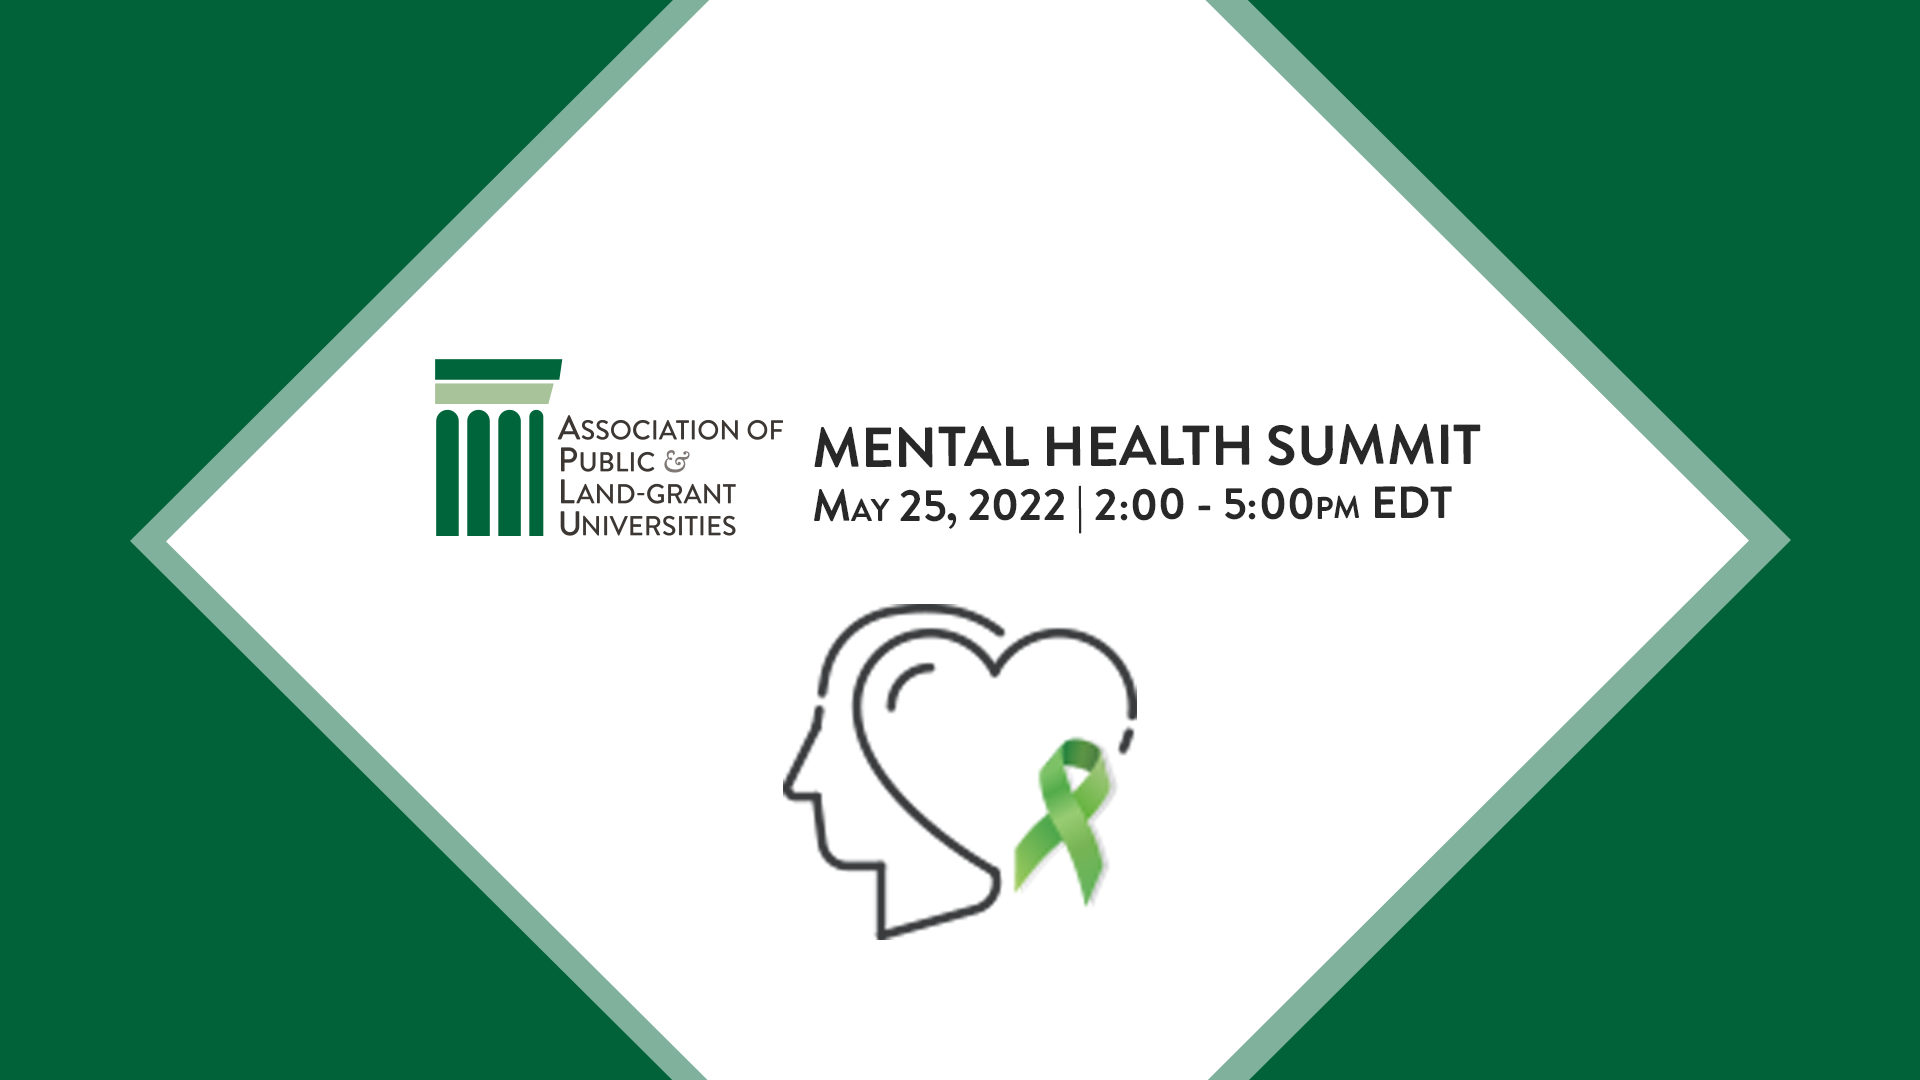 Heading slide for APLU's Mental Health Summit